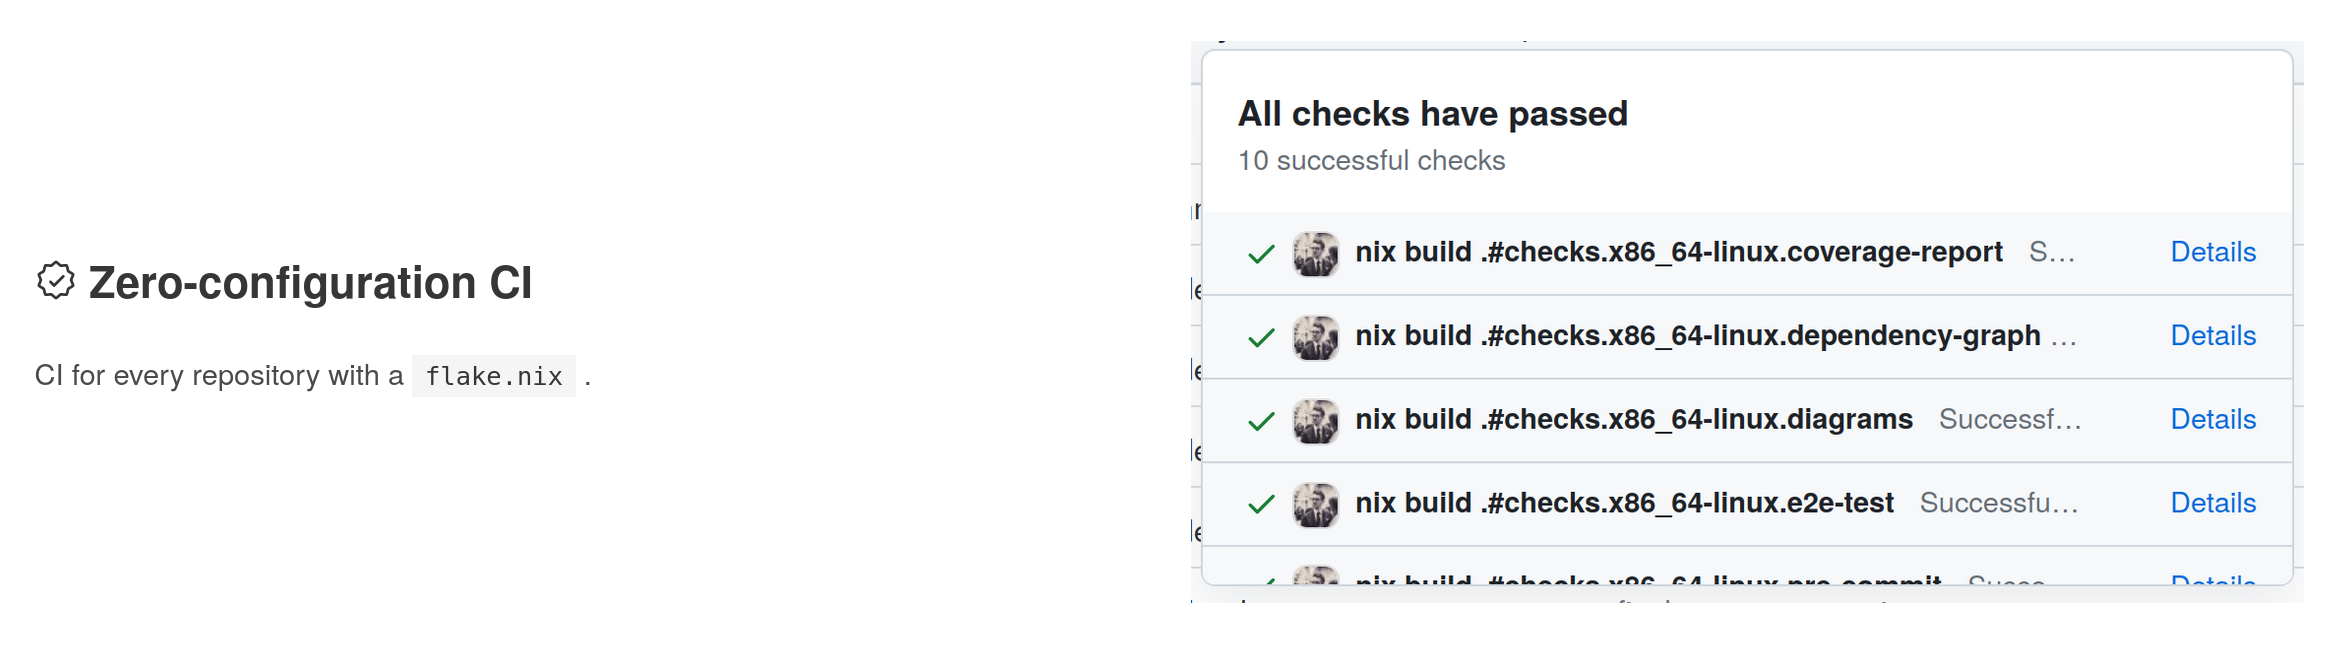 Nix CI Page Benefits